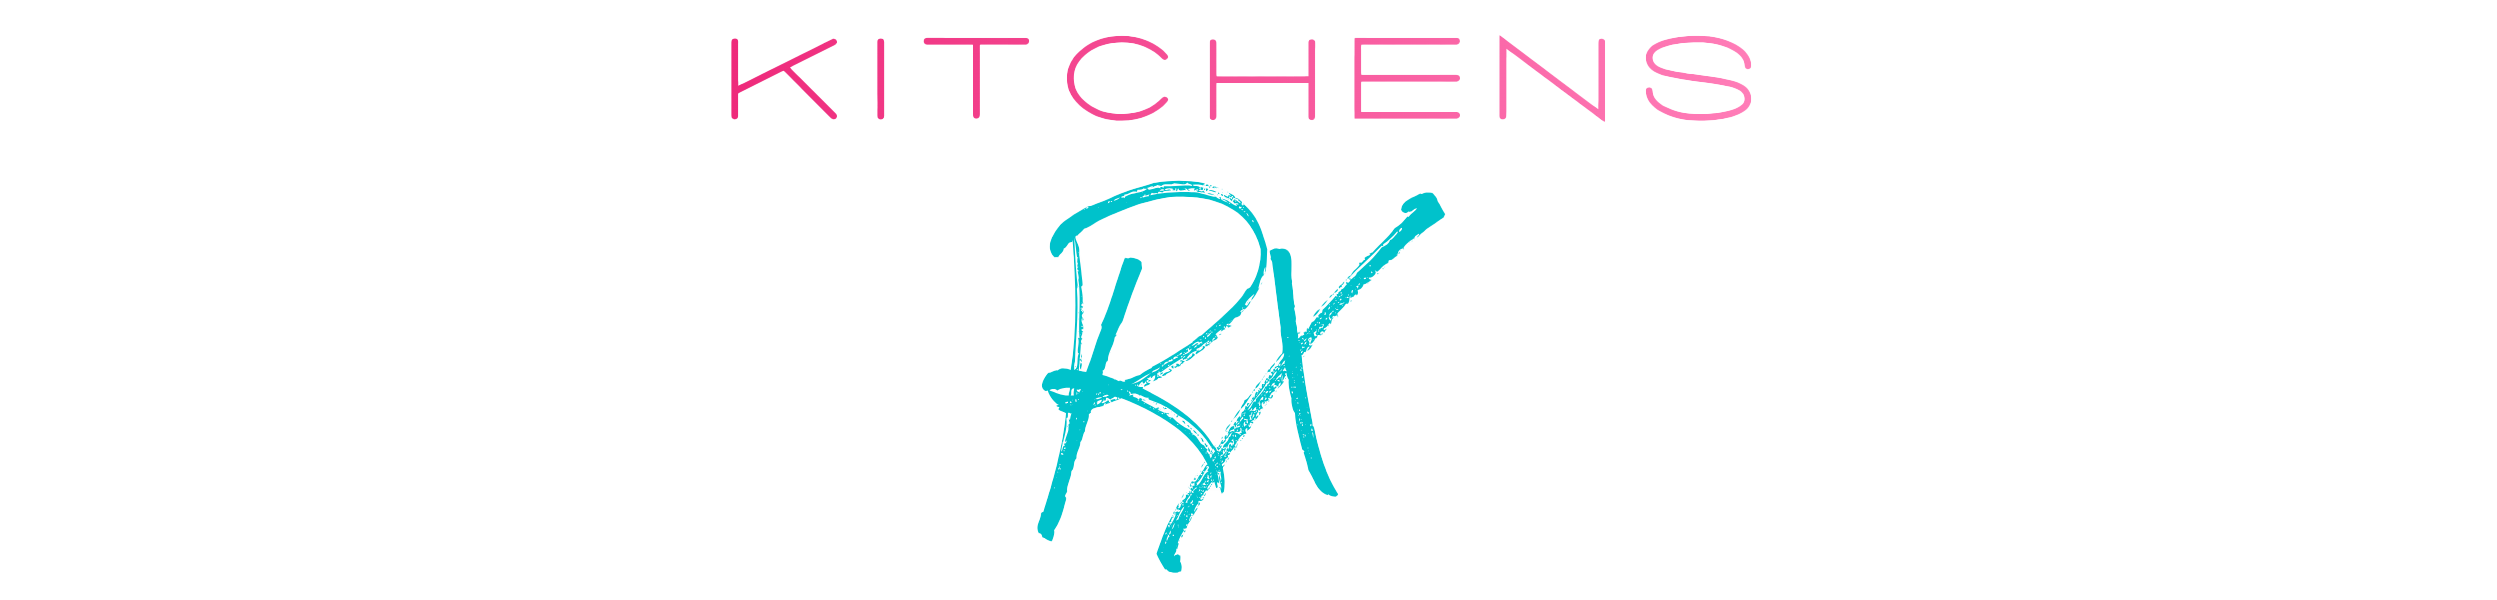 Kitchens Rx